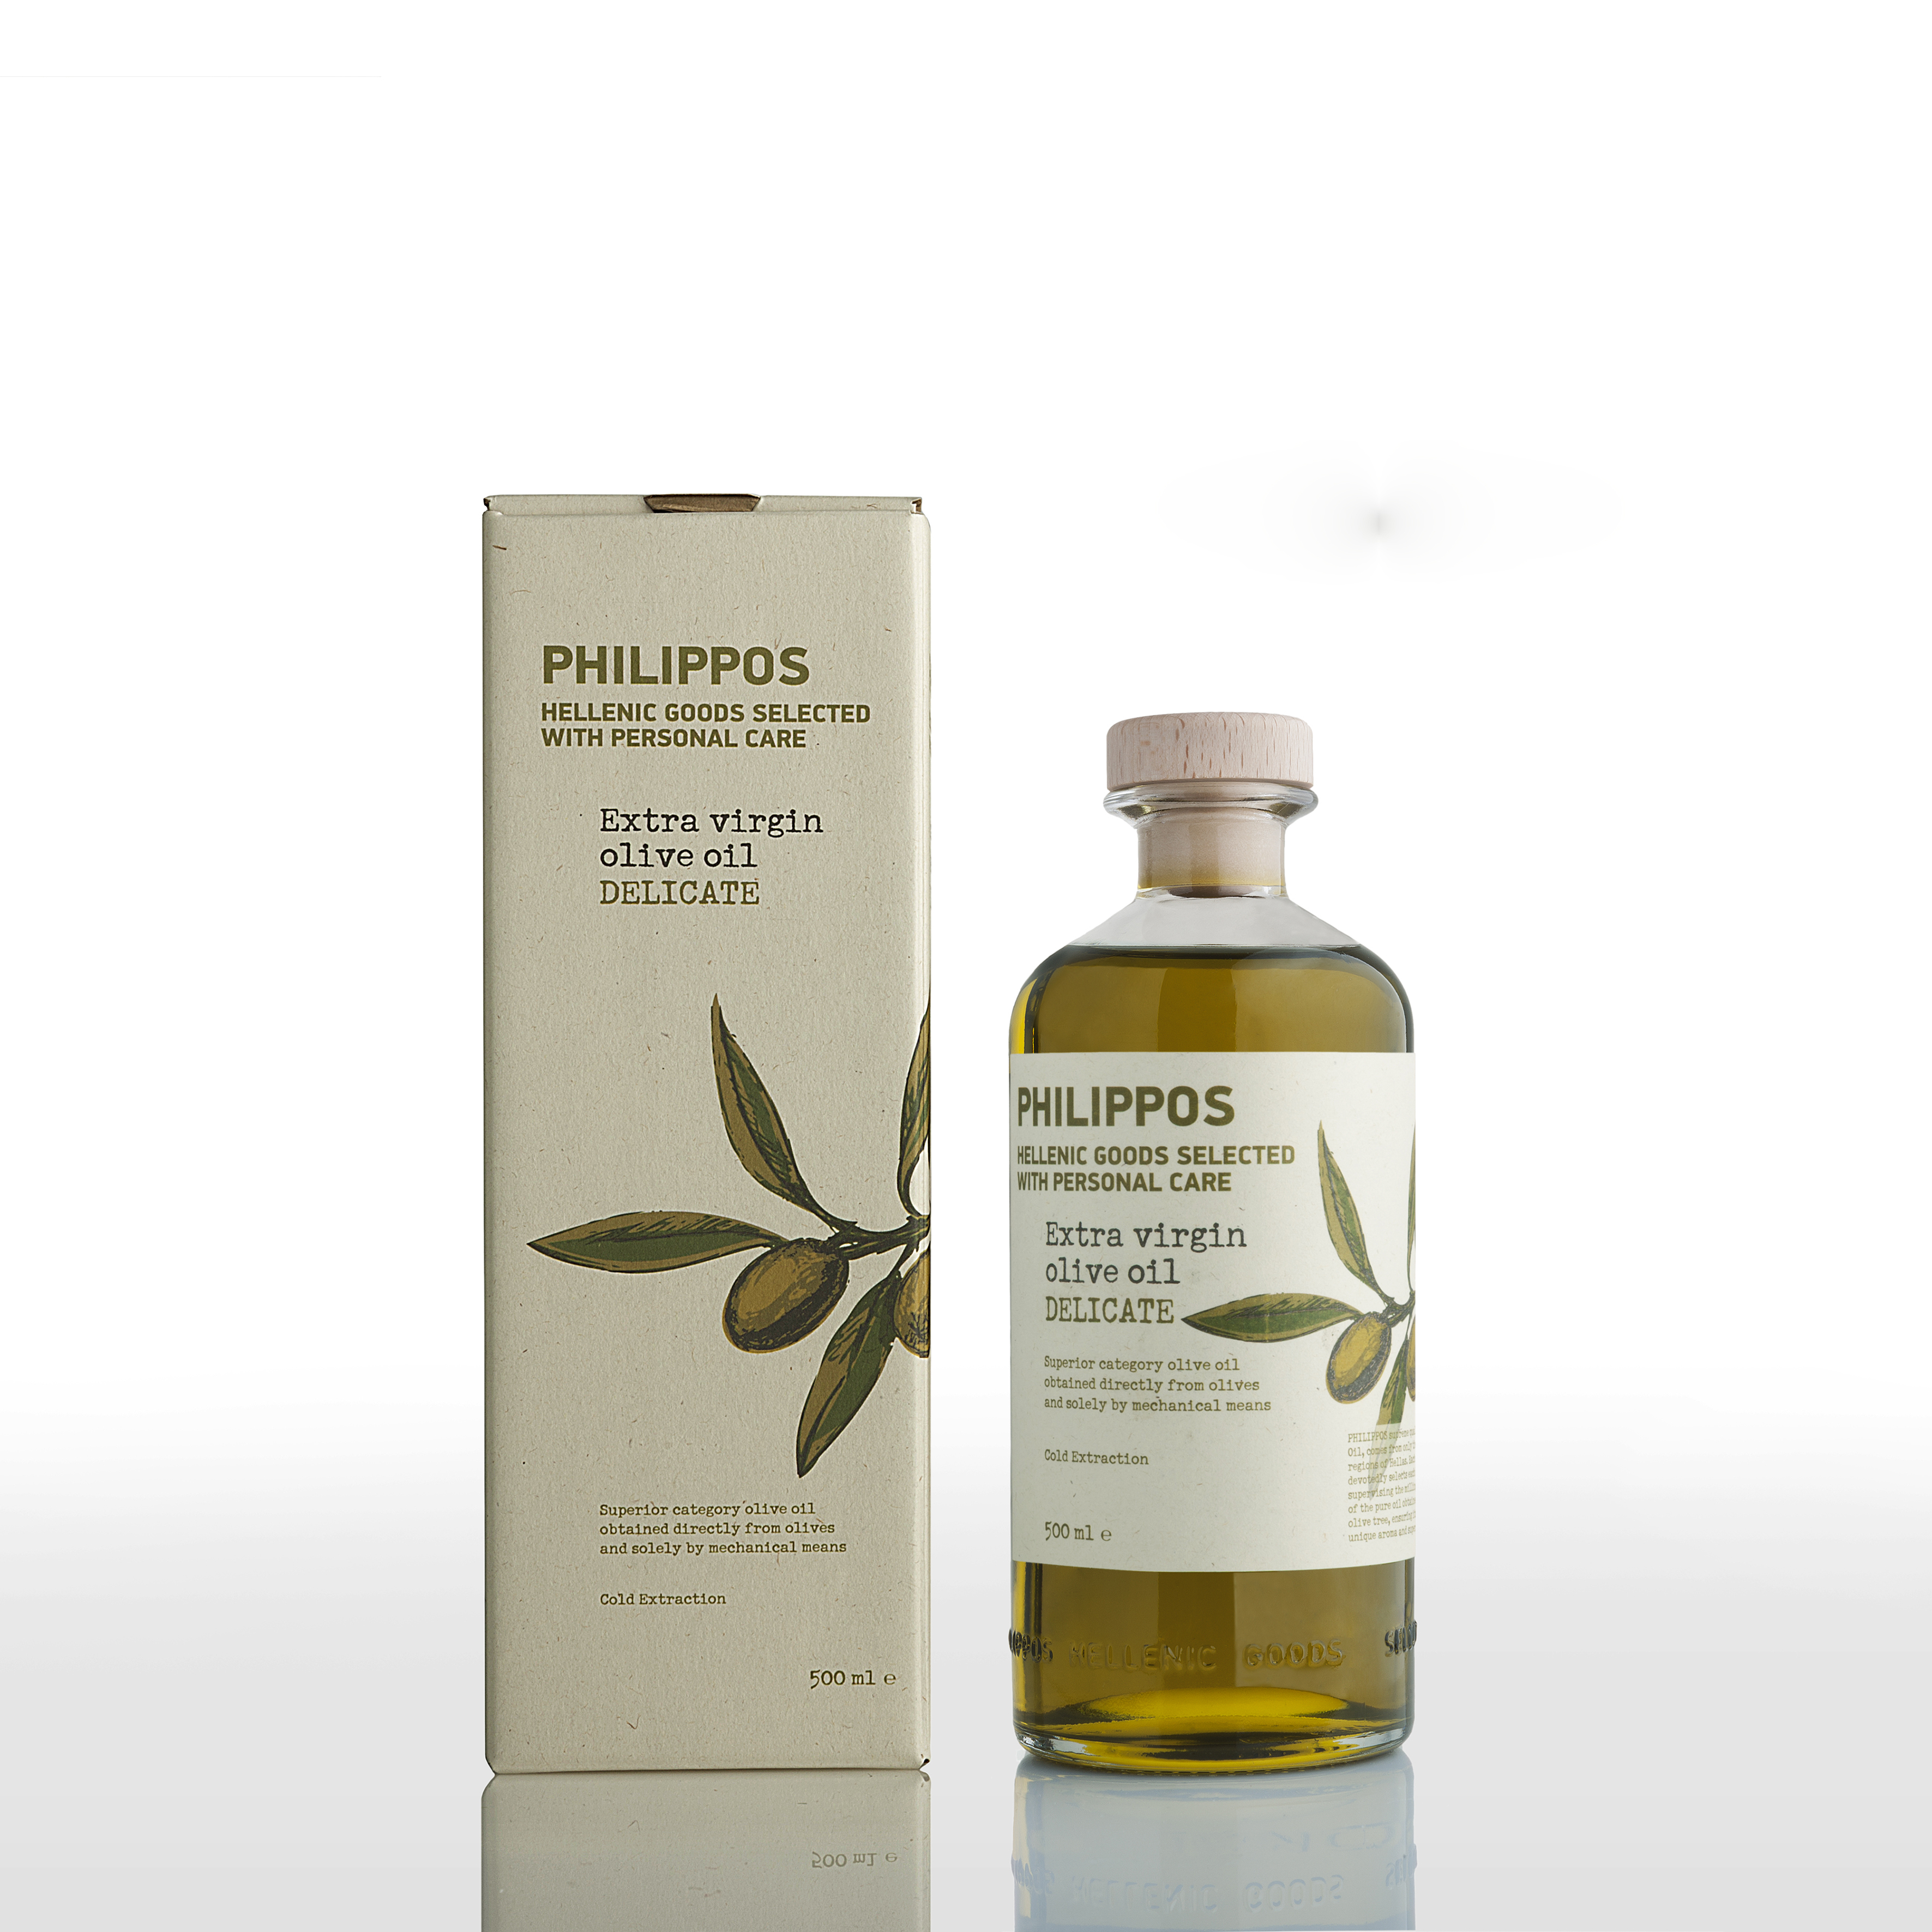 PHILIPPOS PREMIUM Delicate in a box 500 ml